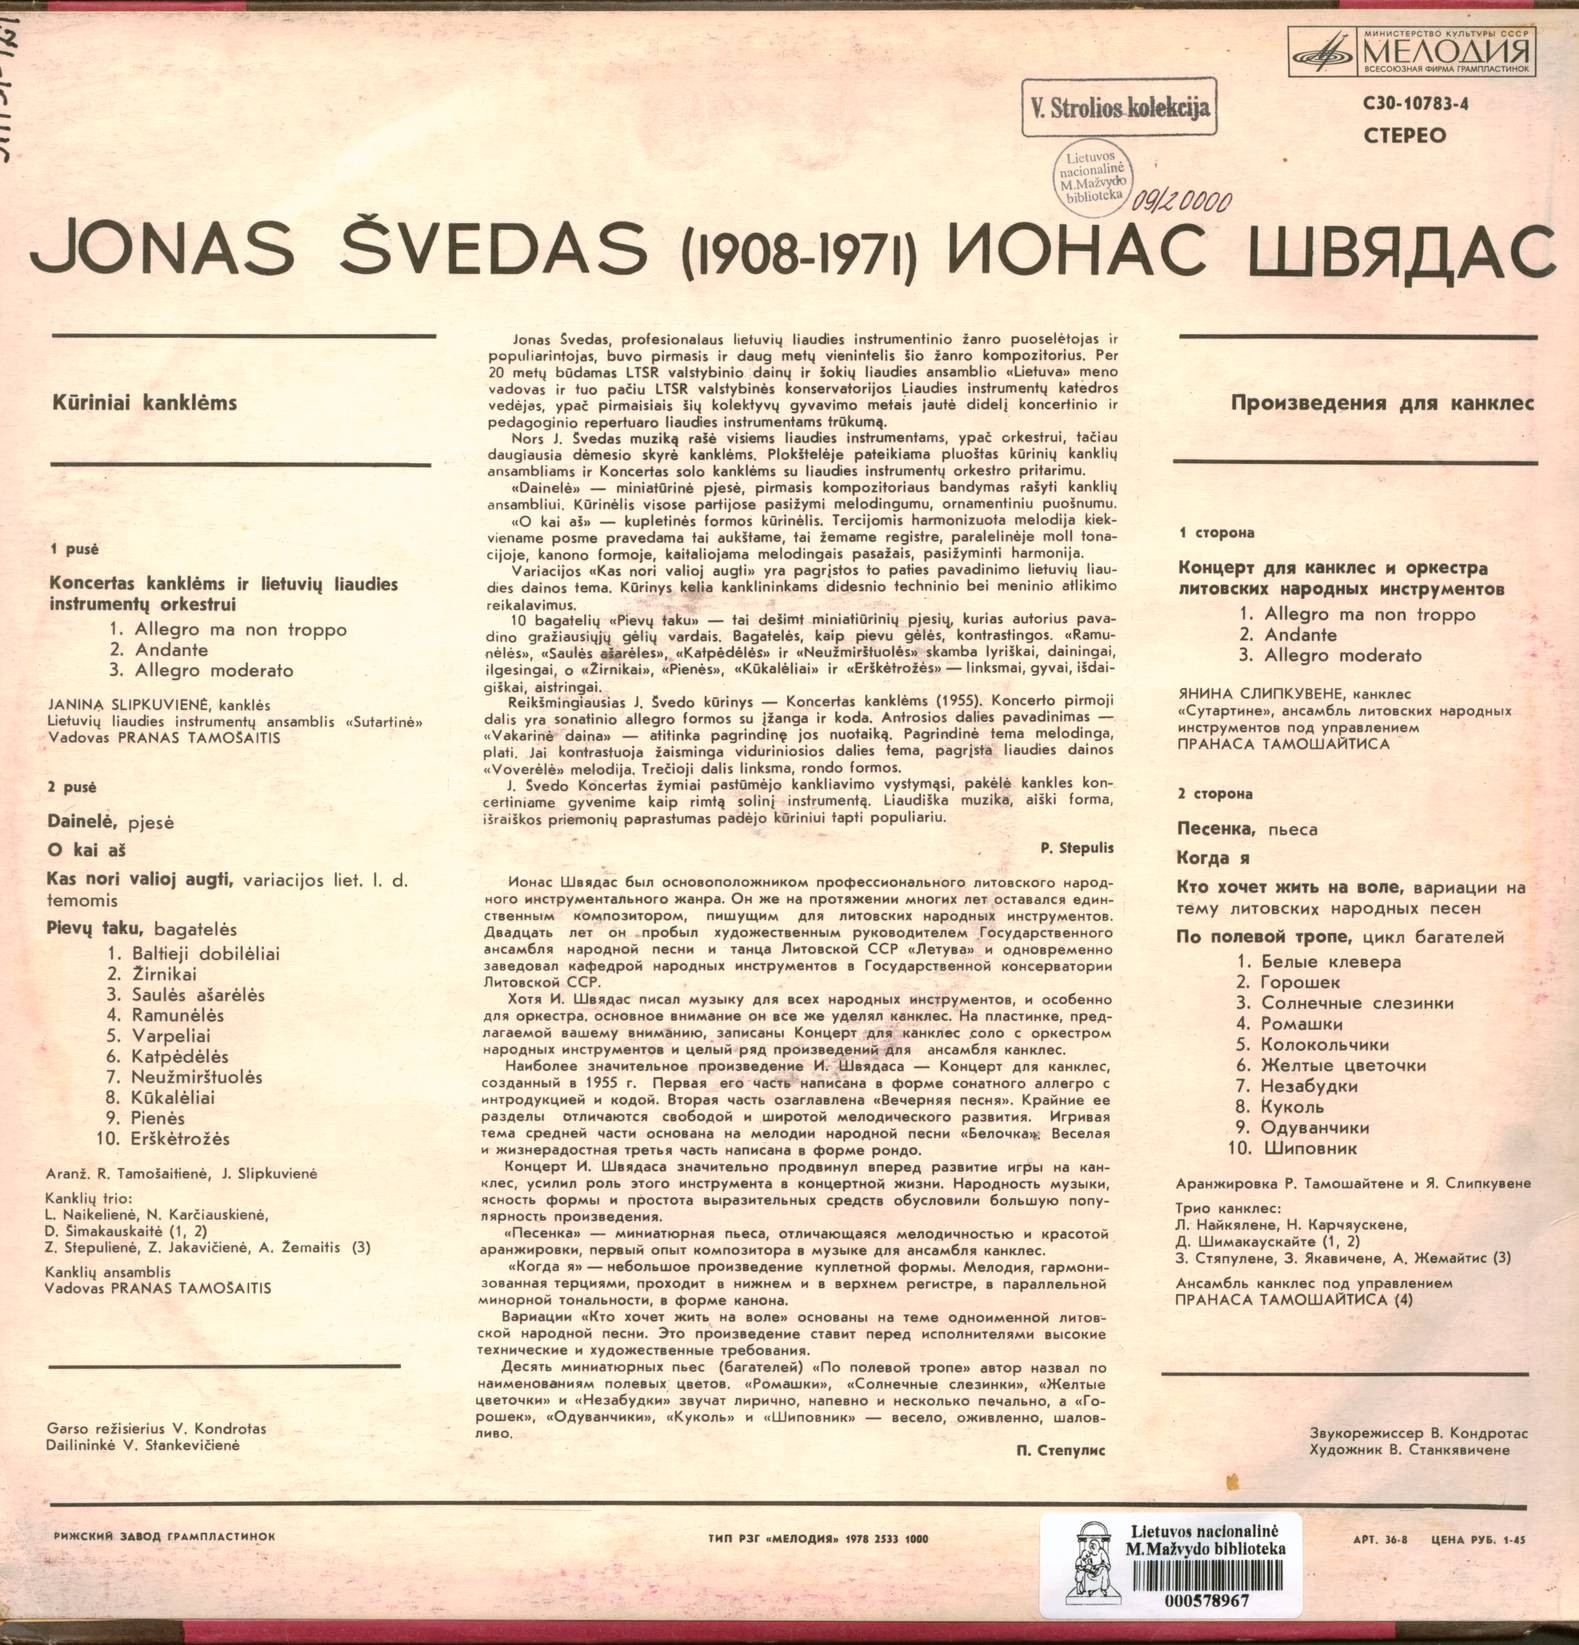 Йонас ШВЯДАС (1908—1971). Произведения для канклес / Jonas SVEDAS. Kuriniai kanklems